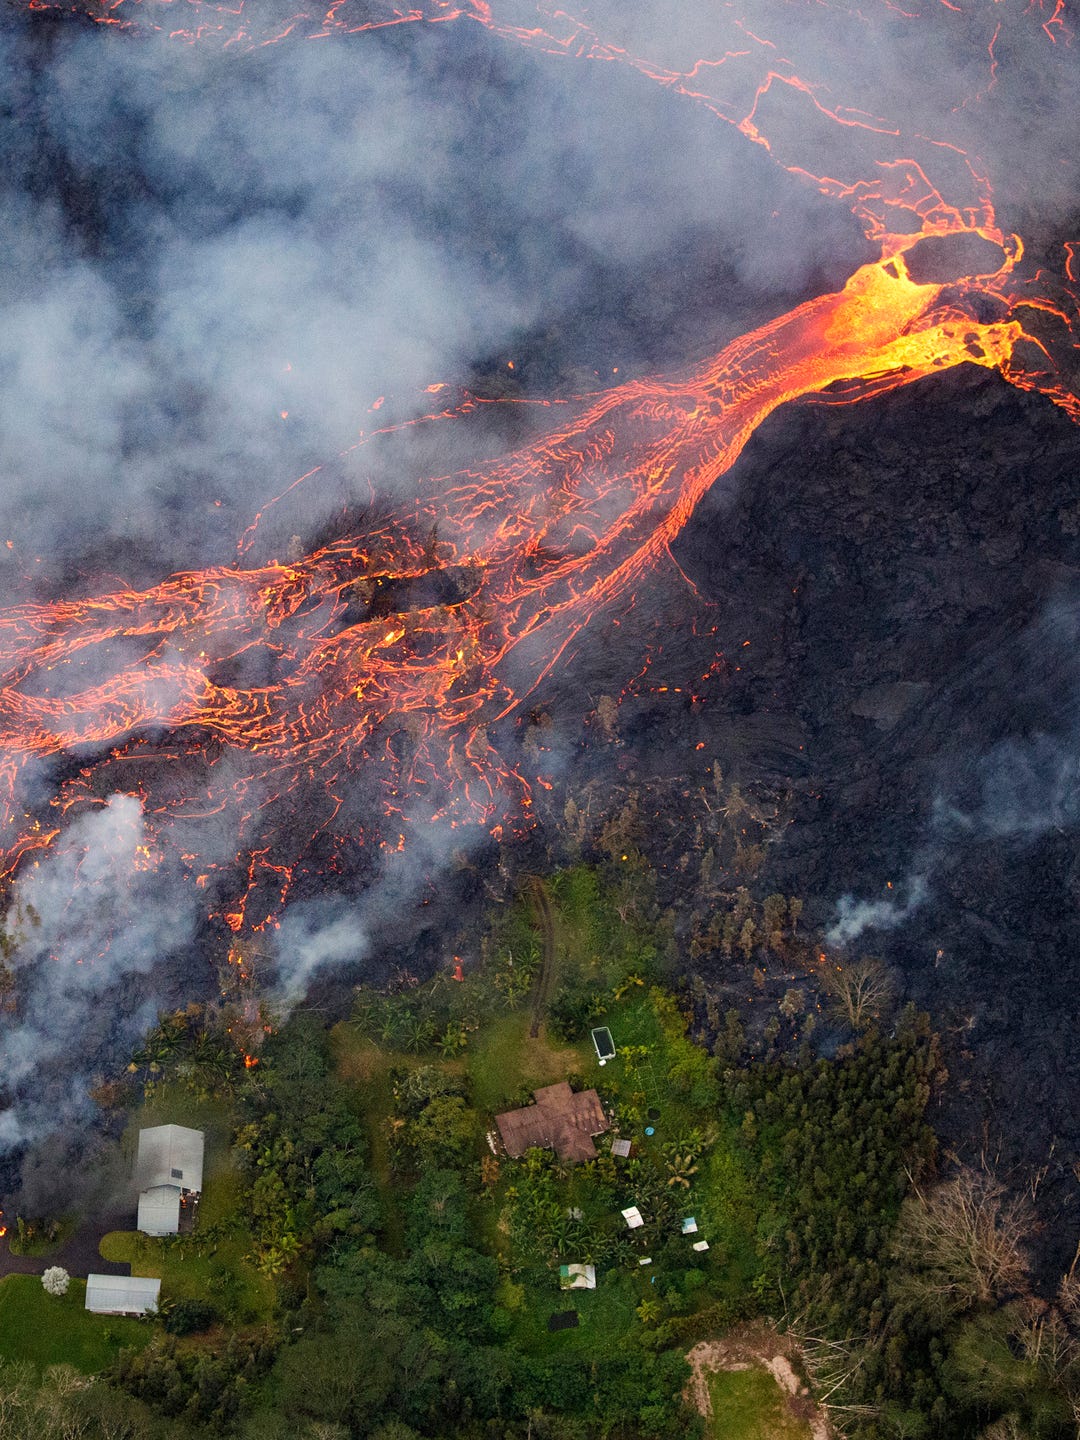 Hawaii volcano: Acid rain will fall; 'vog' in the forecast